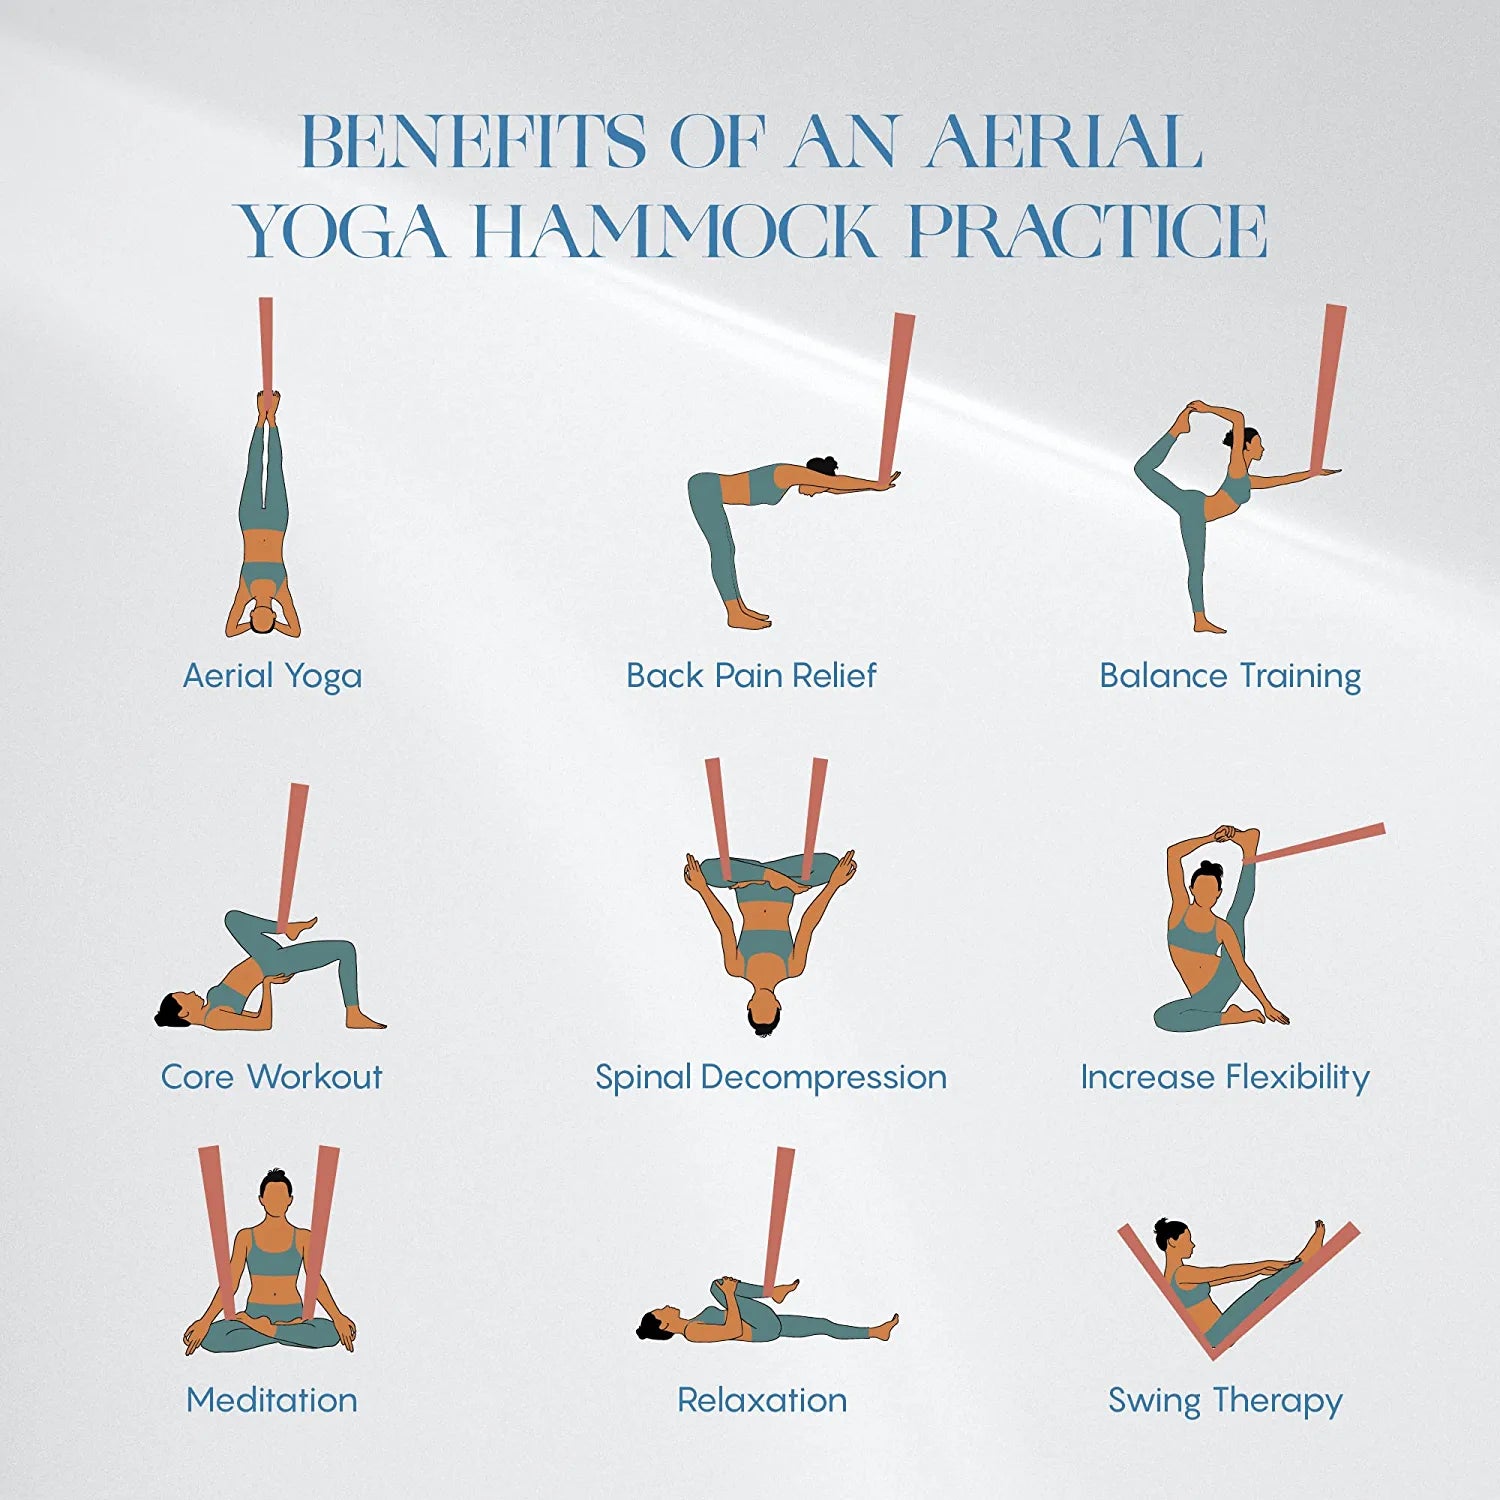 AntiGravity yoga uses modified hammocks for fitness, health | The Gazette